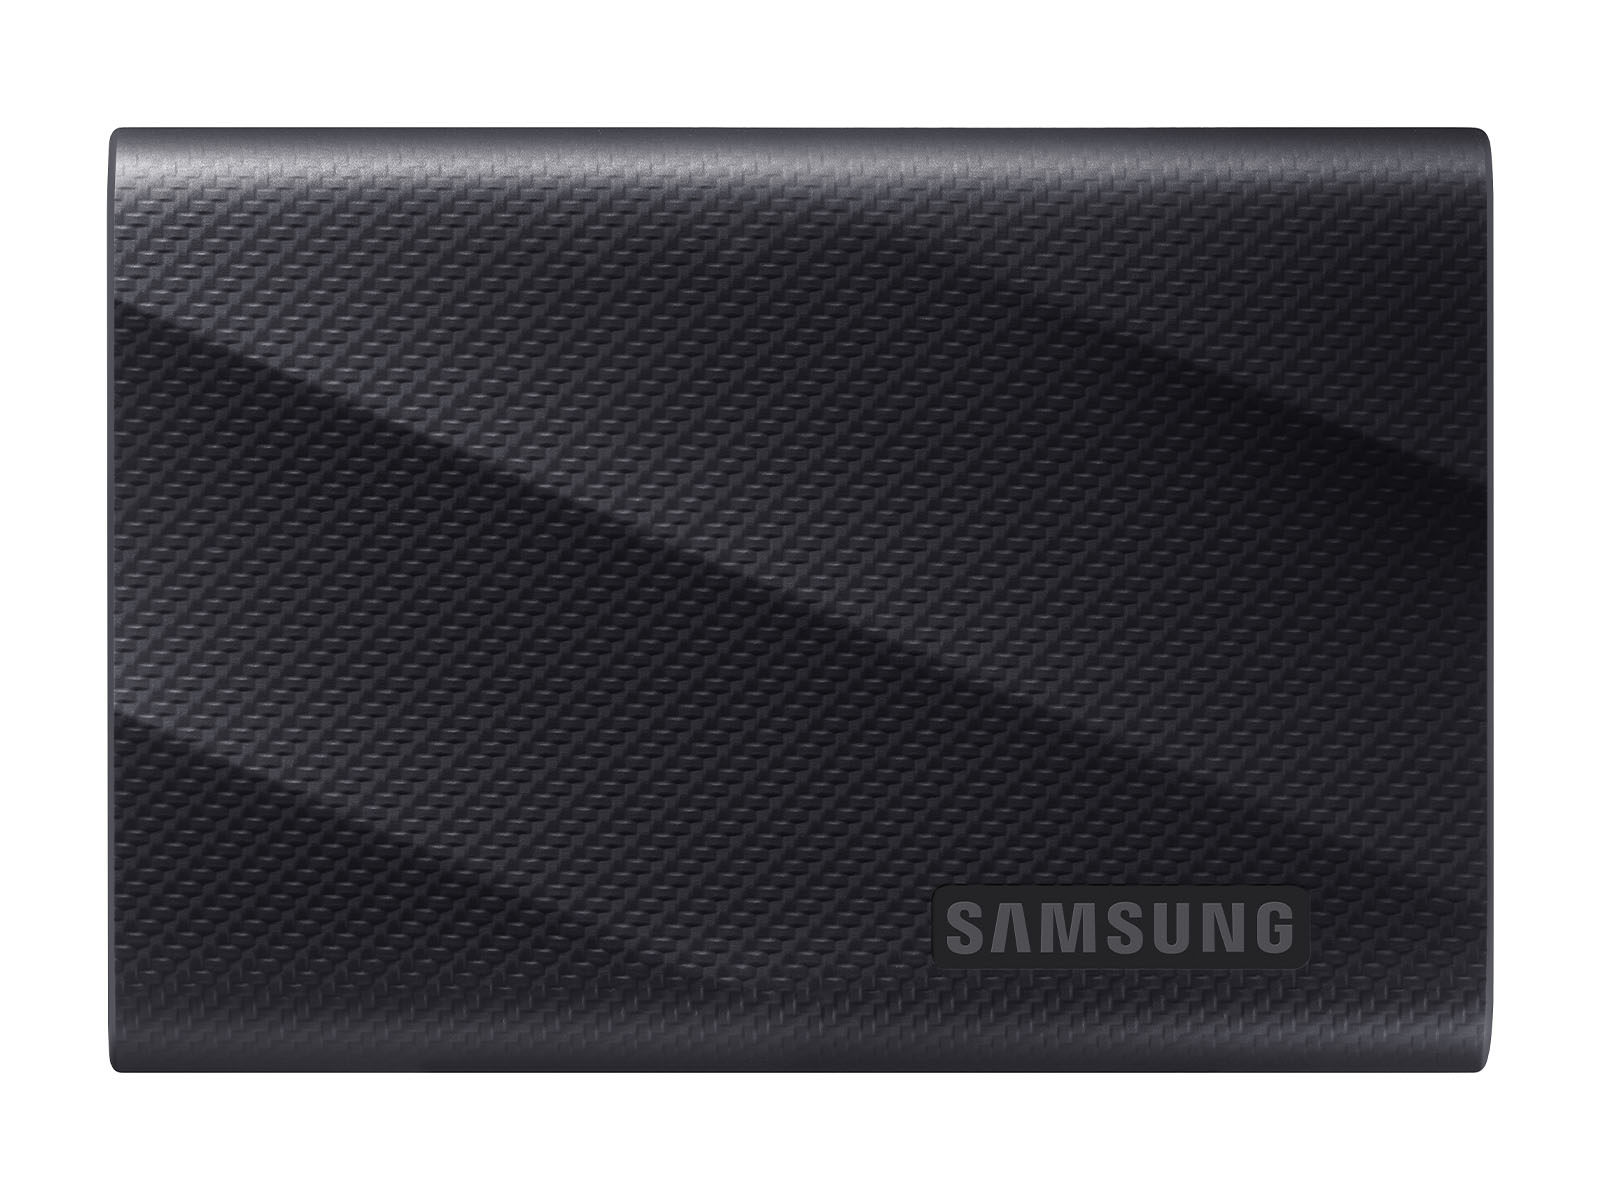 Samsung T9 1 To - Disque dur et SSD externe - Top Achat